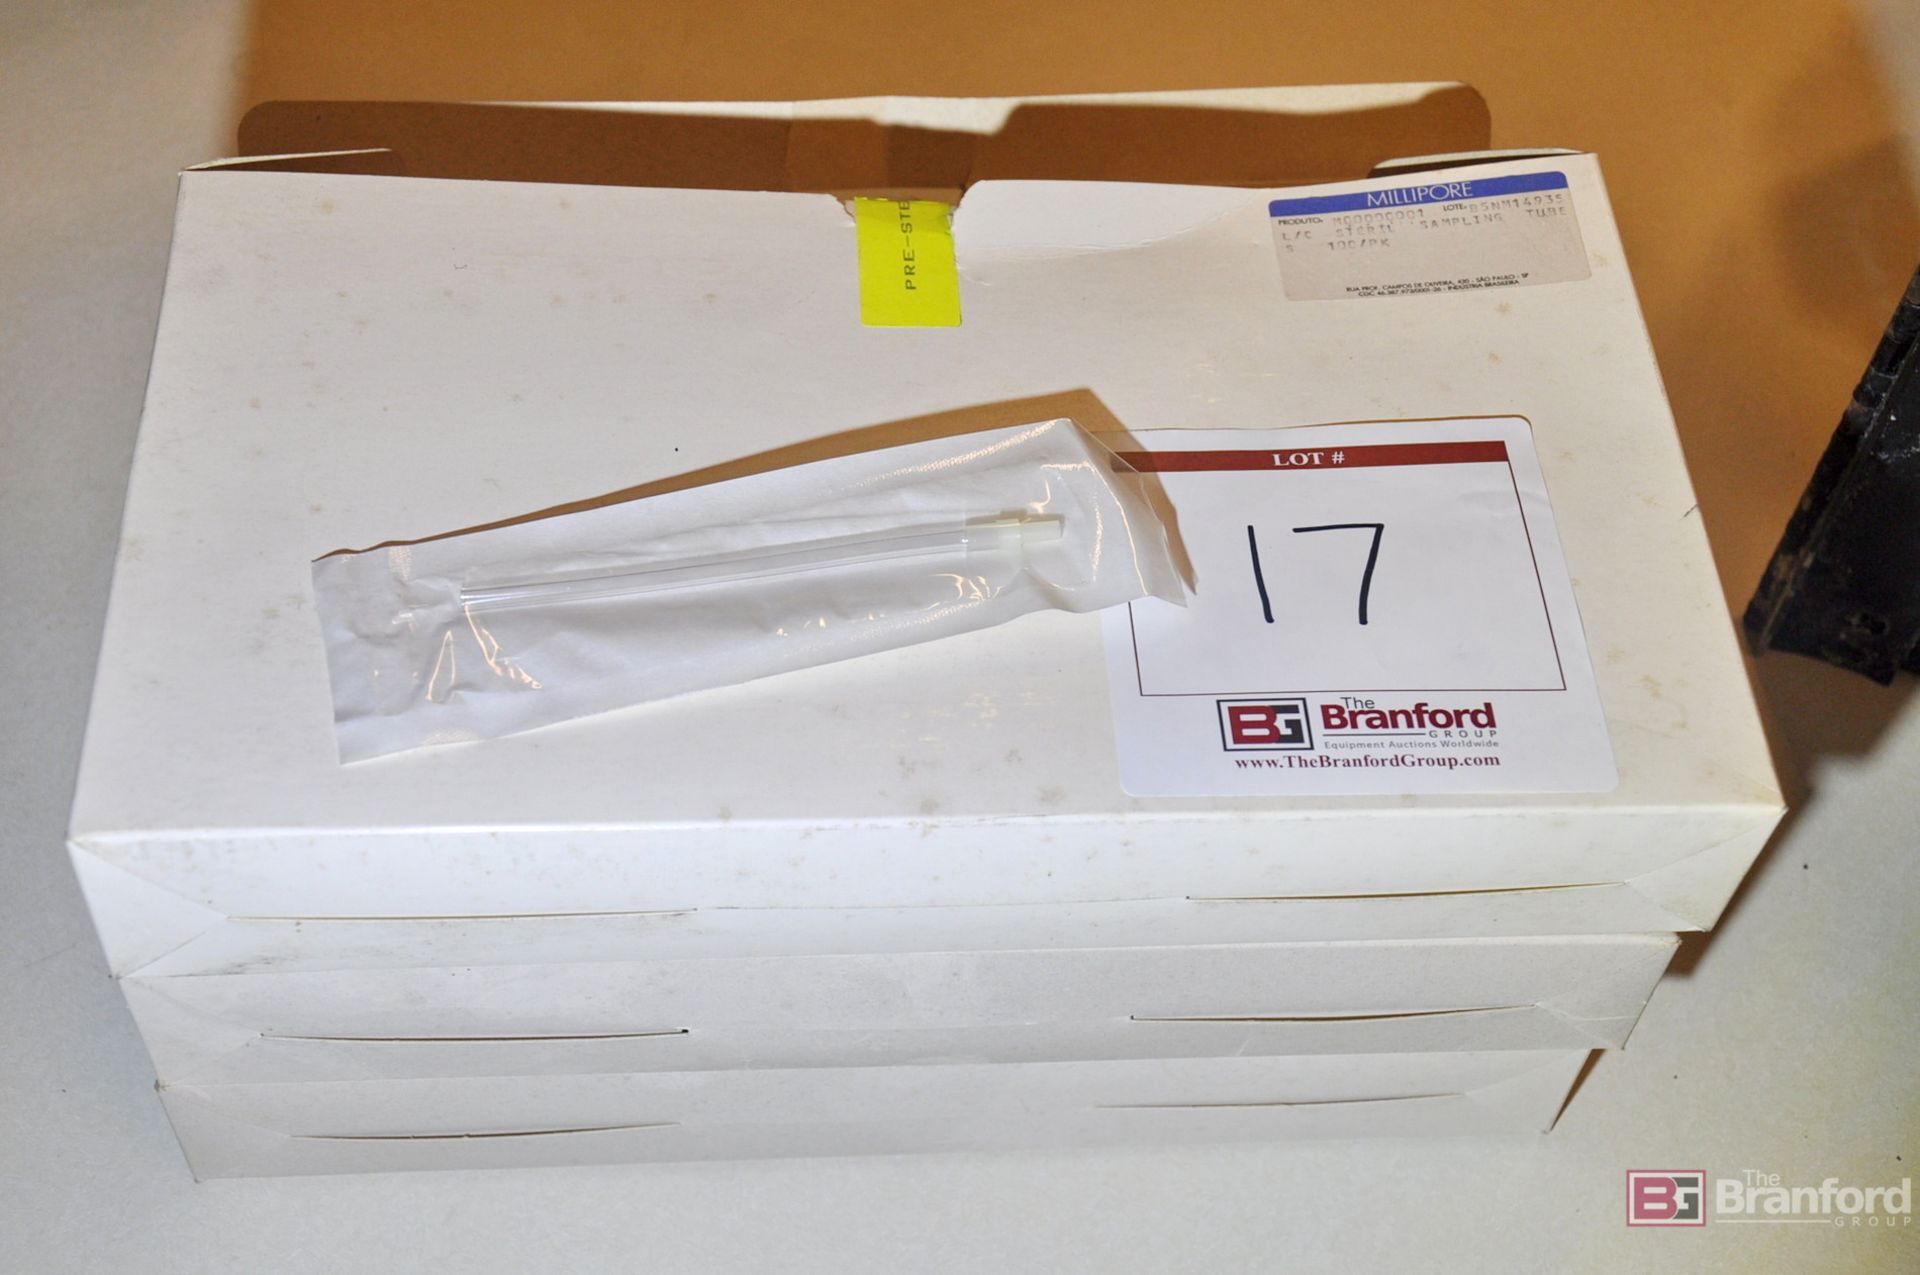 (3) Boxes of Millipore sterilized sampling tubes